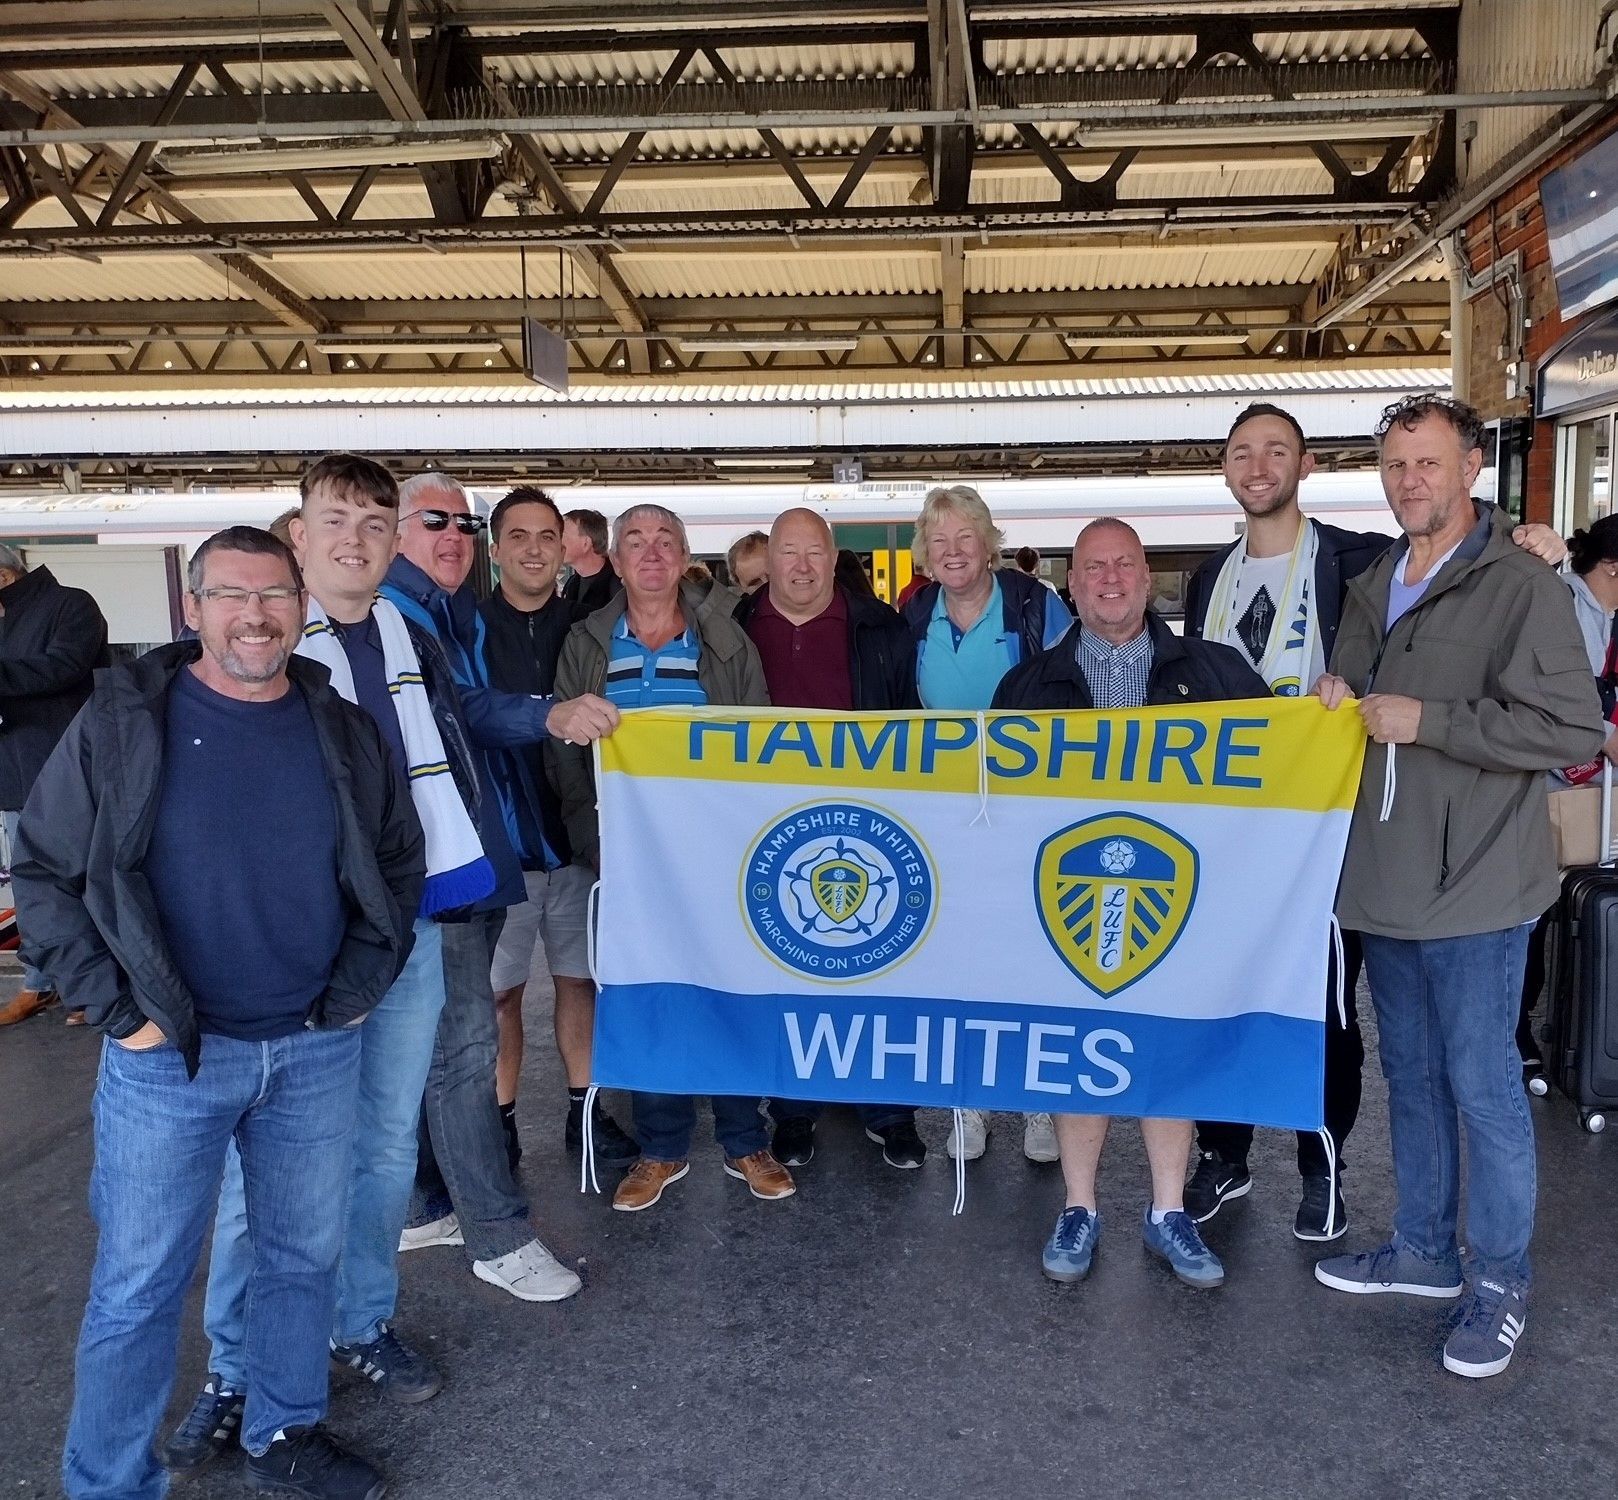 Hampshire Whites group shot with flag on train platform